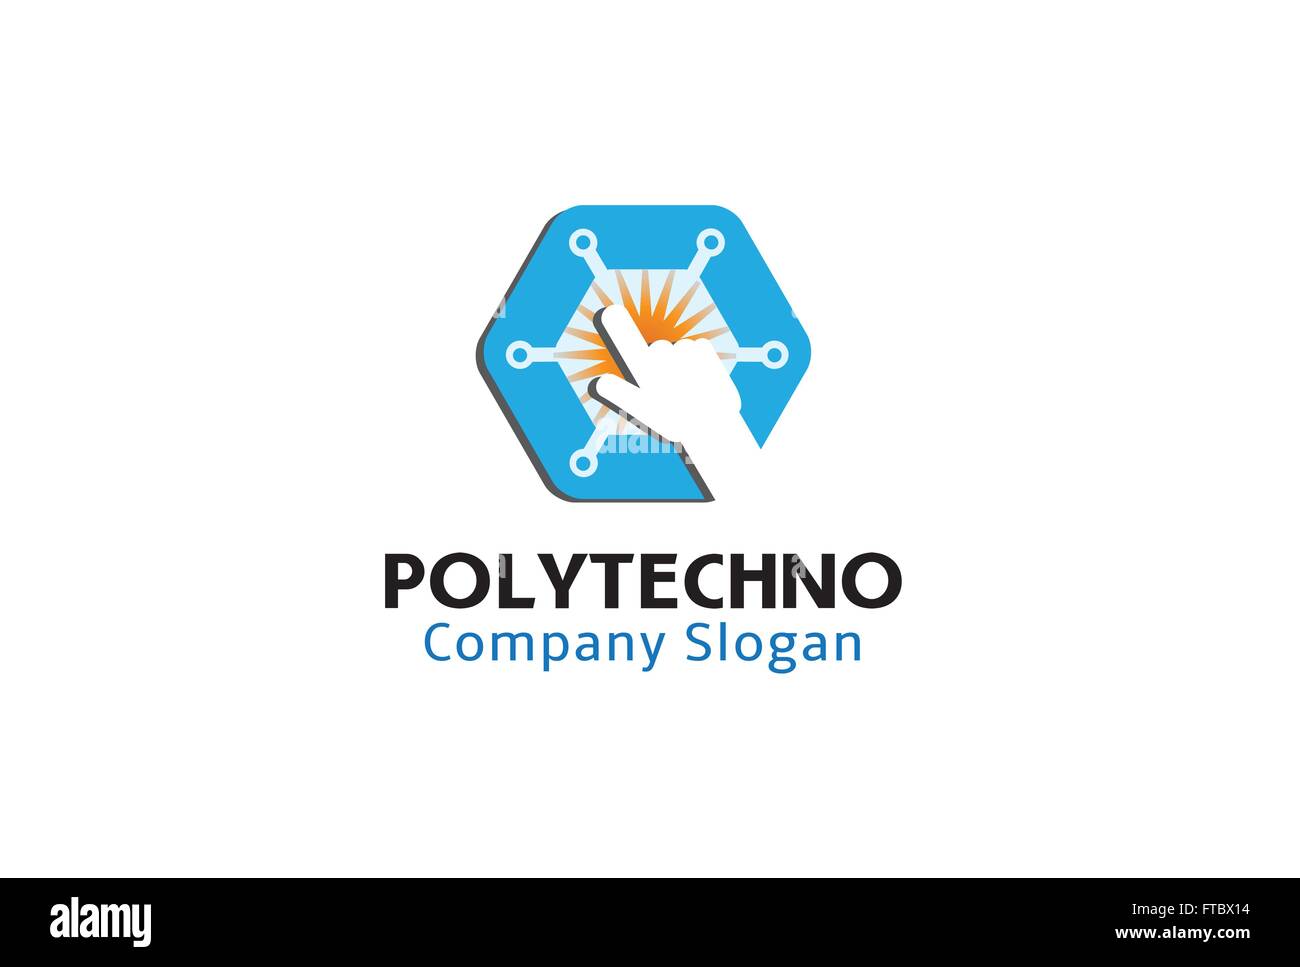 Polygon-Technologie-Design-Darstellung Stock Vektor